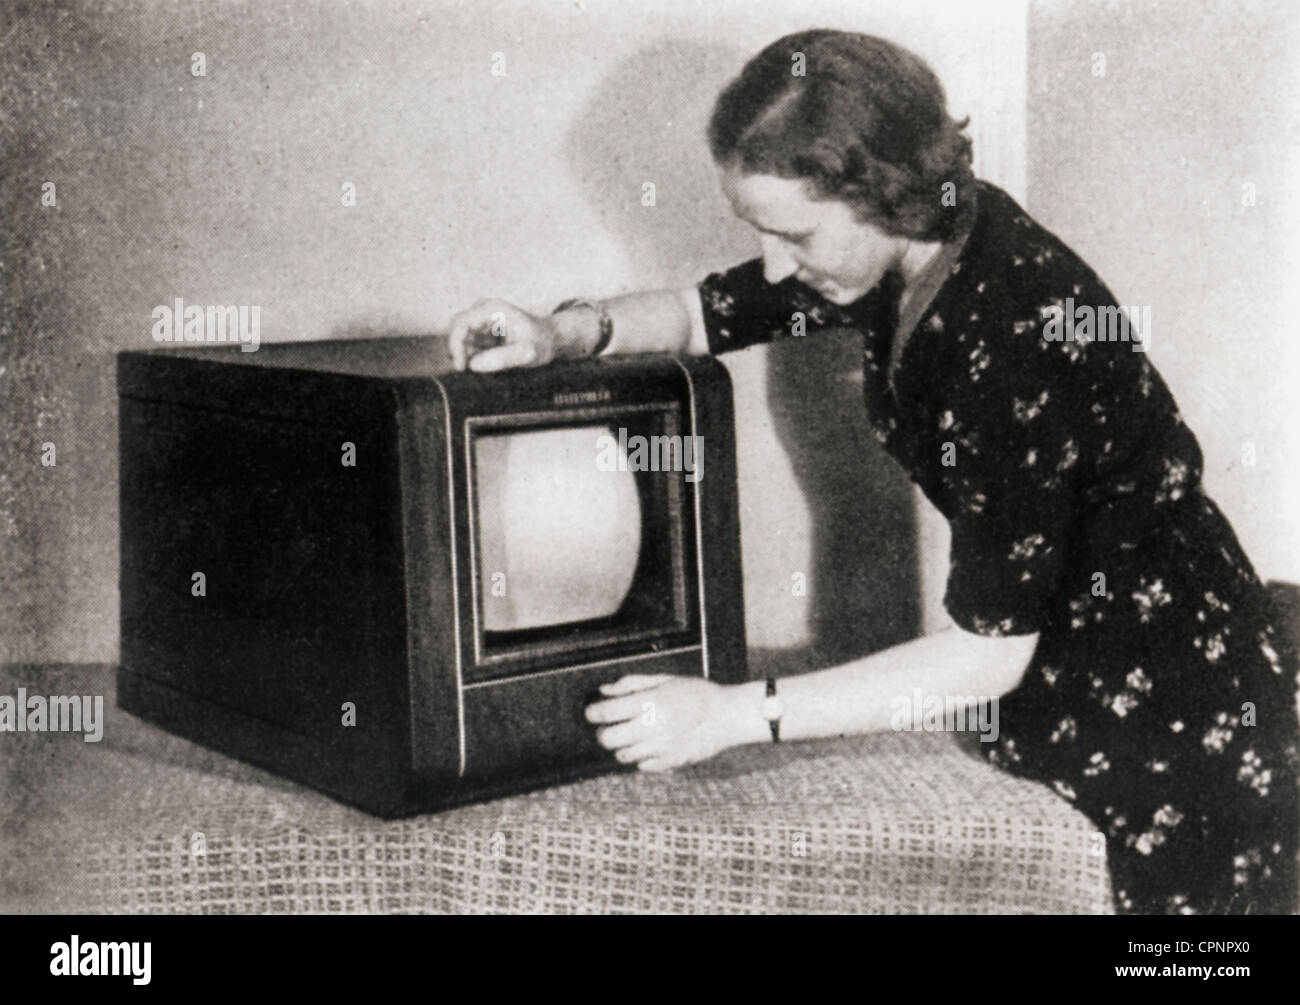 telefunken tv vintage